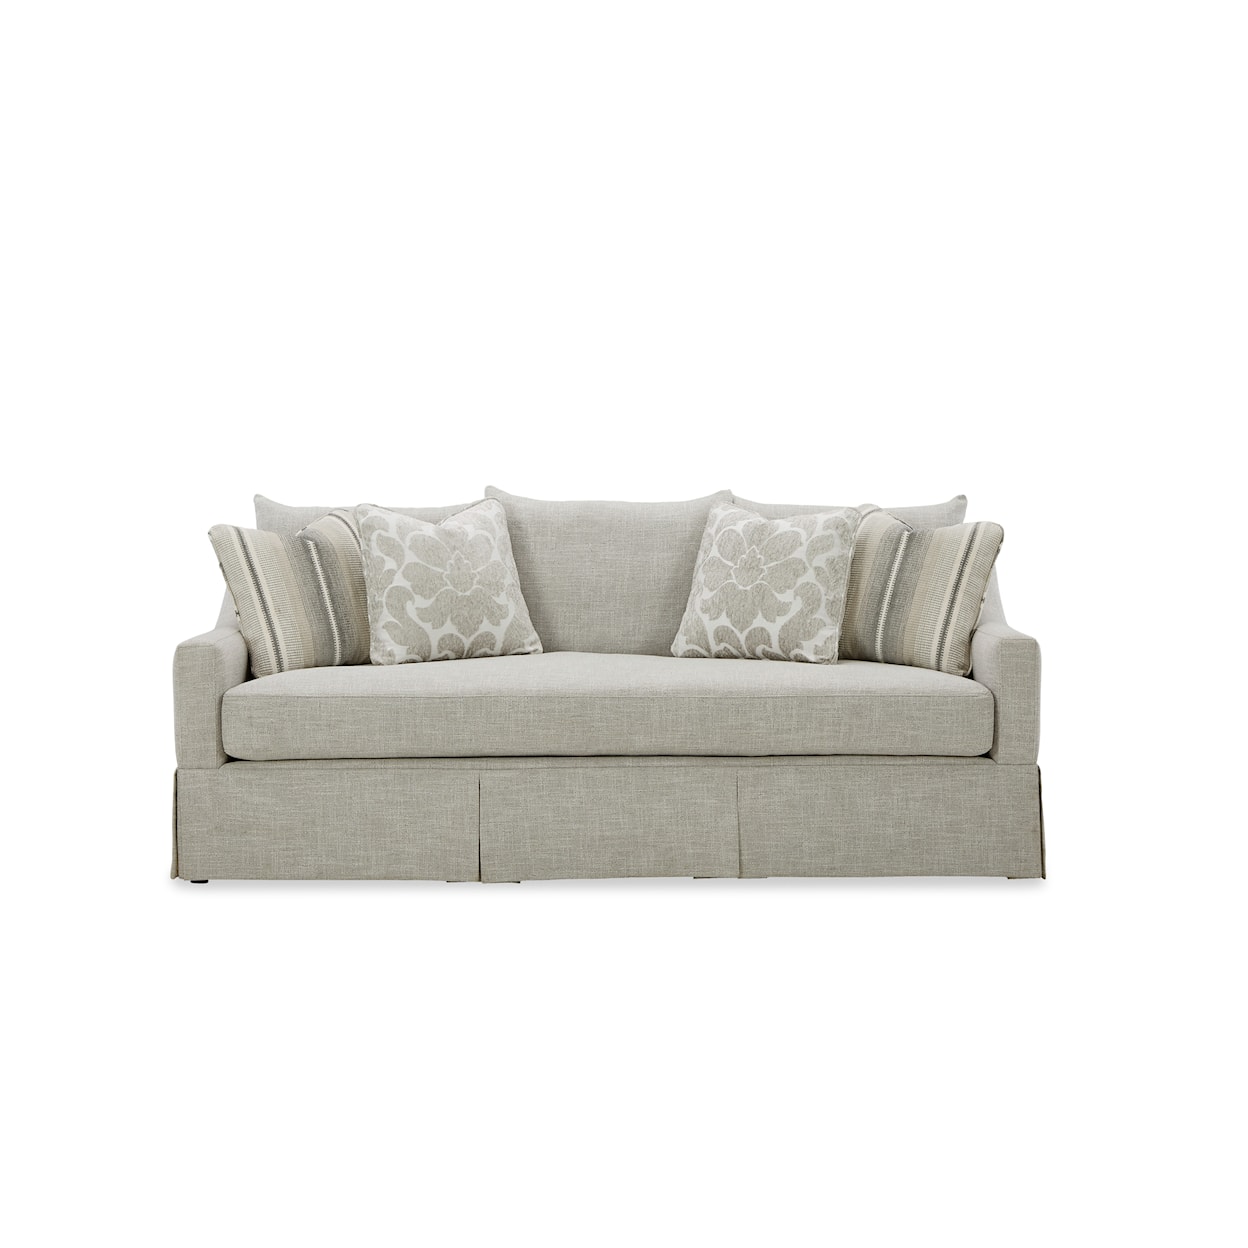 Craftmaster 915850BD Bench Seat Sofa